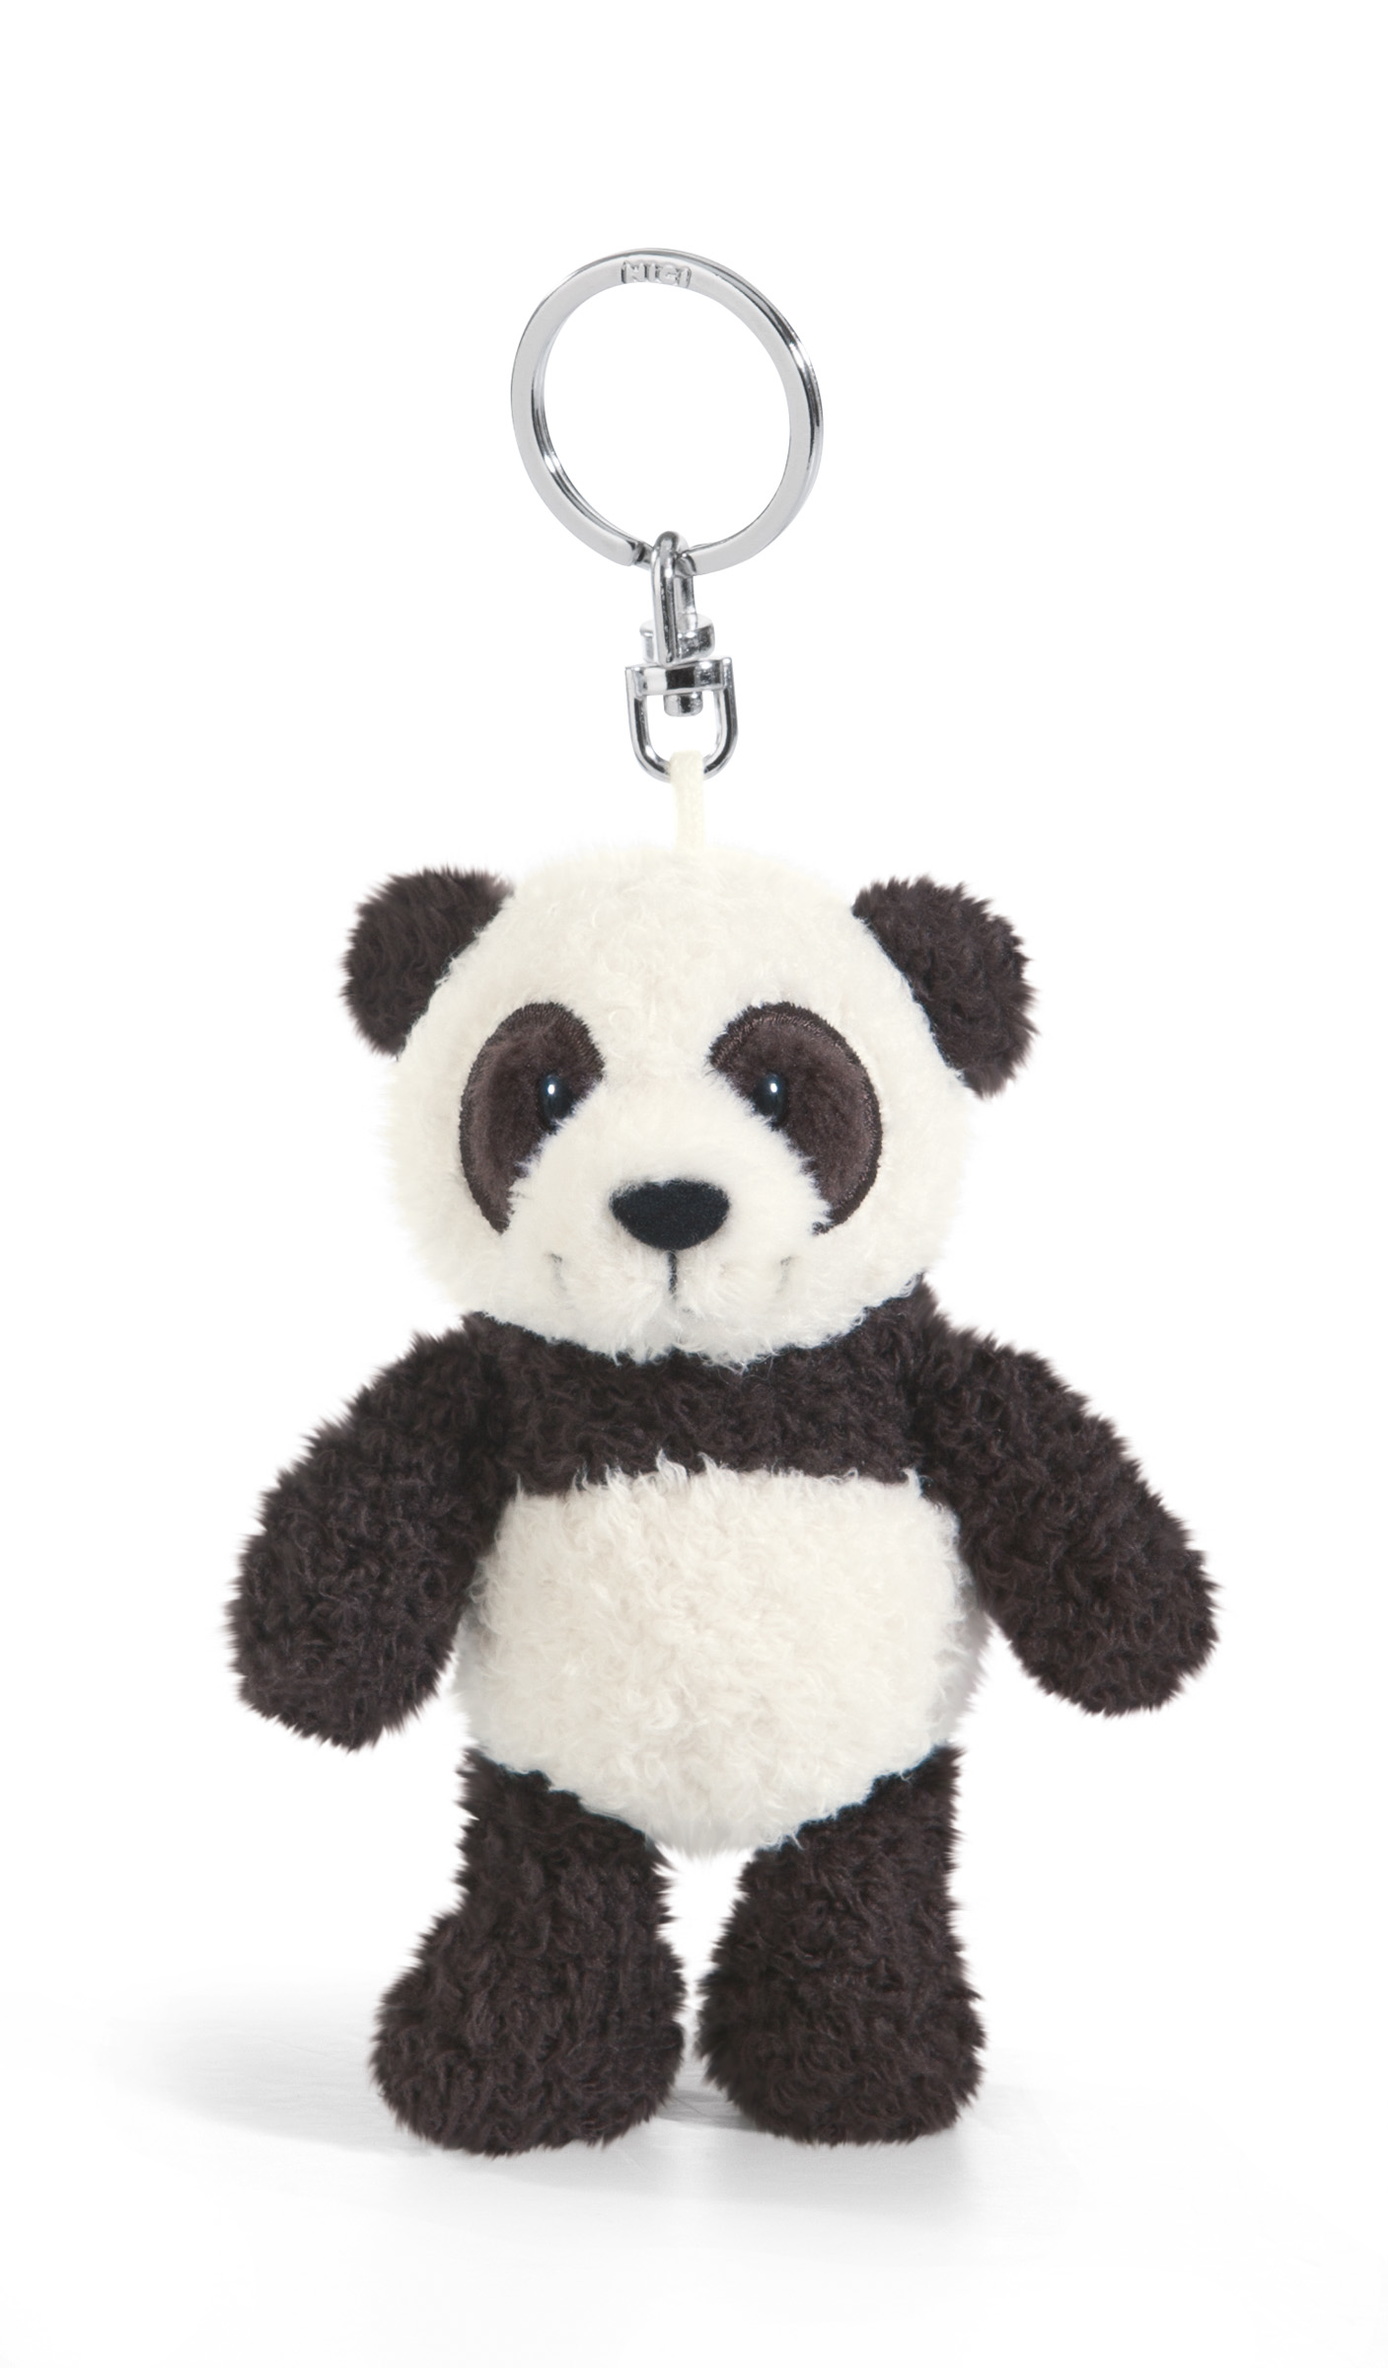 Nici 41081 Panda Yaa Boo 15cm Schlenker Kuscheltier Plüsch Wild Friends 